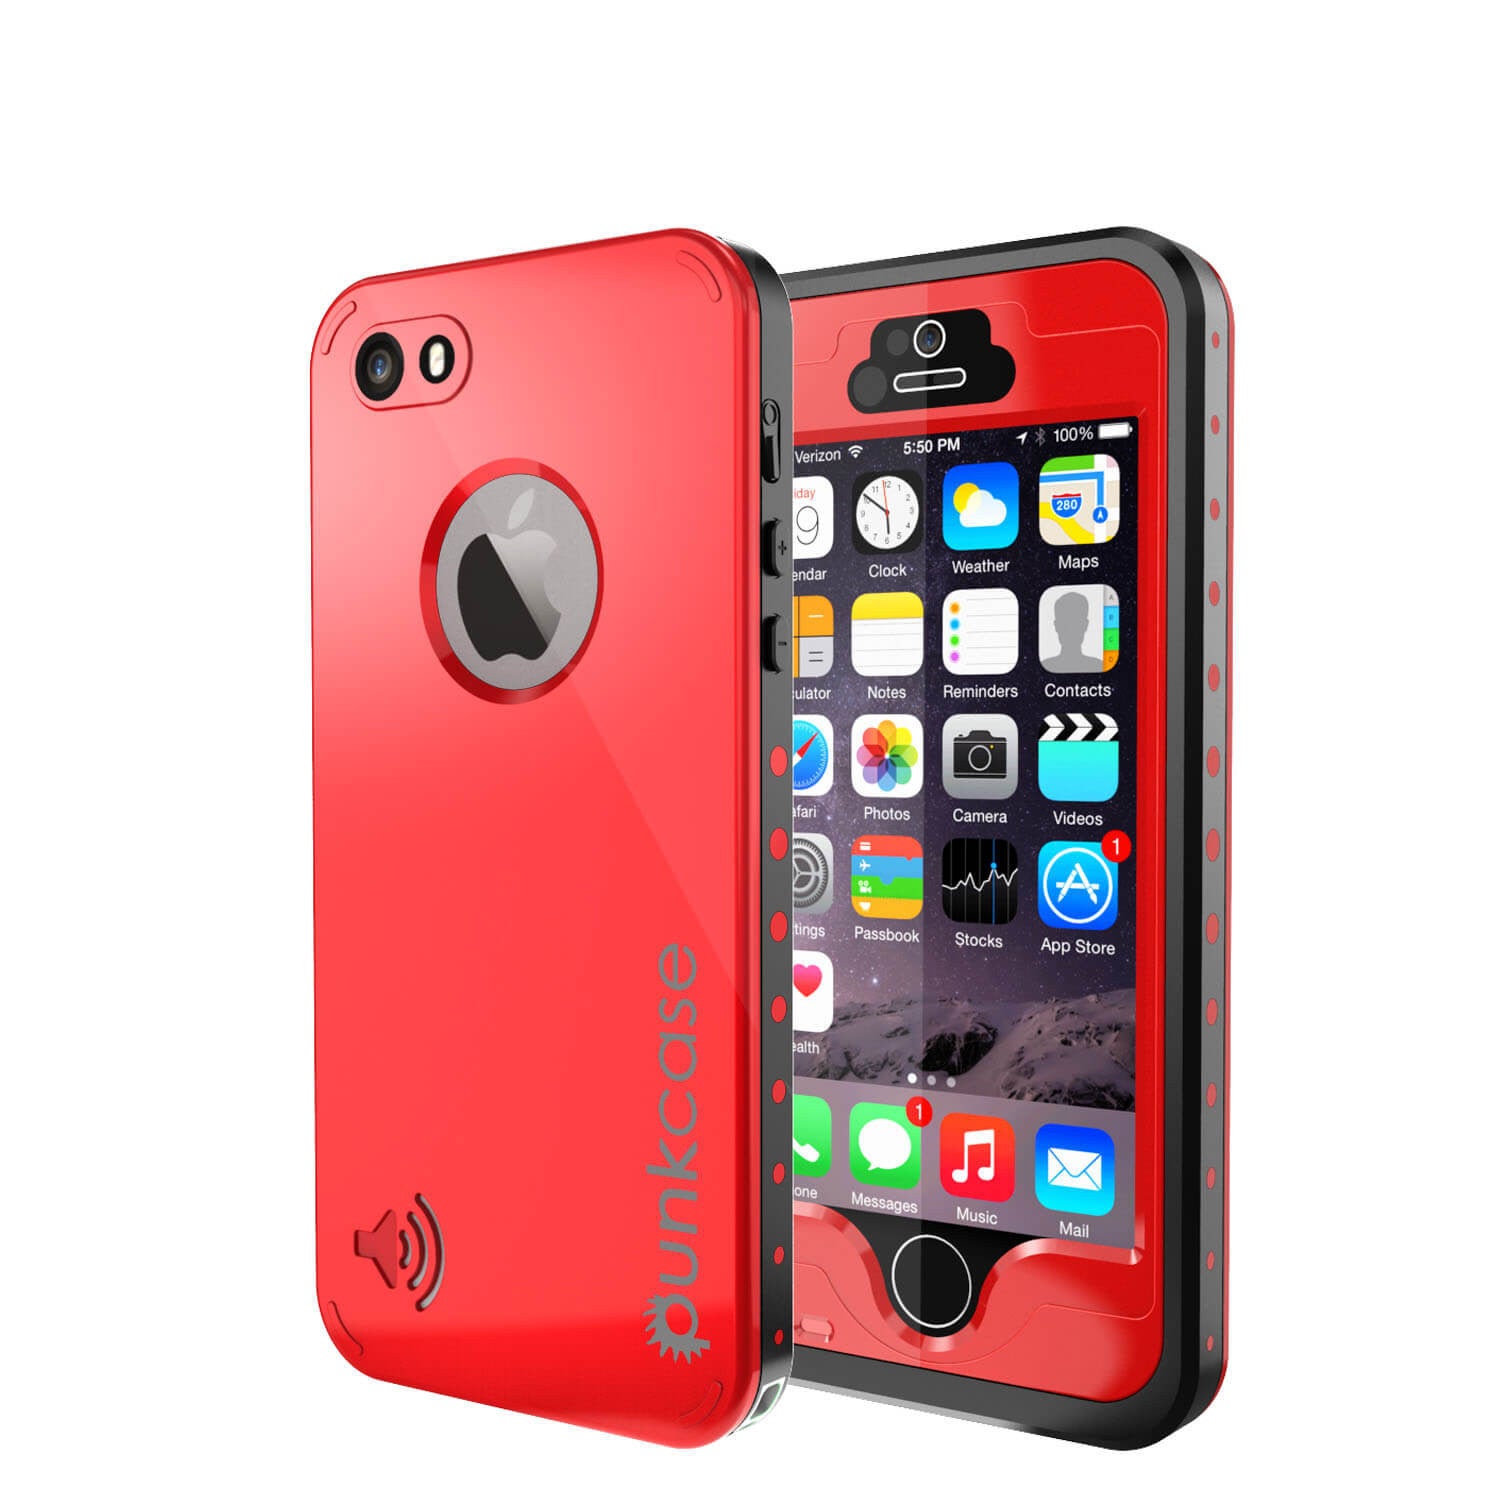 iPhone 5S/5 Waterproof Case, PunkCase StudStar Red Case Water/Shock/Dirt Proof | Lifetime Warranty (Color in image: red)